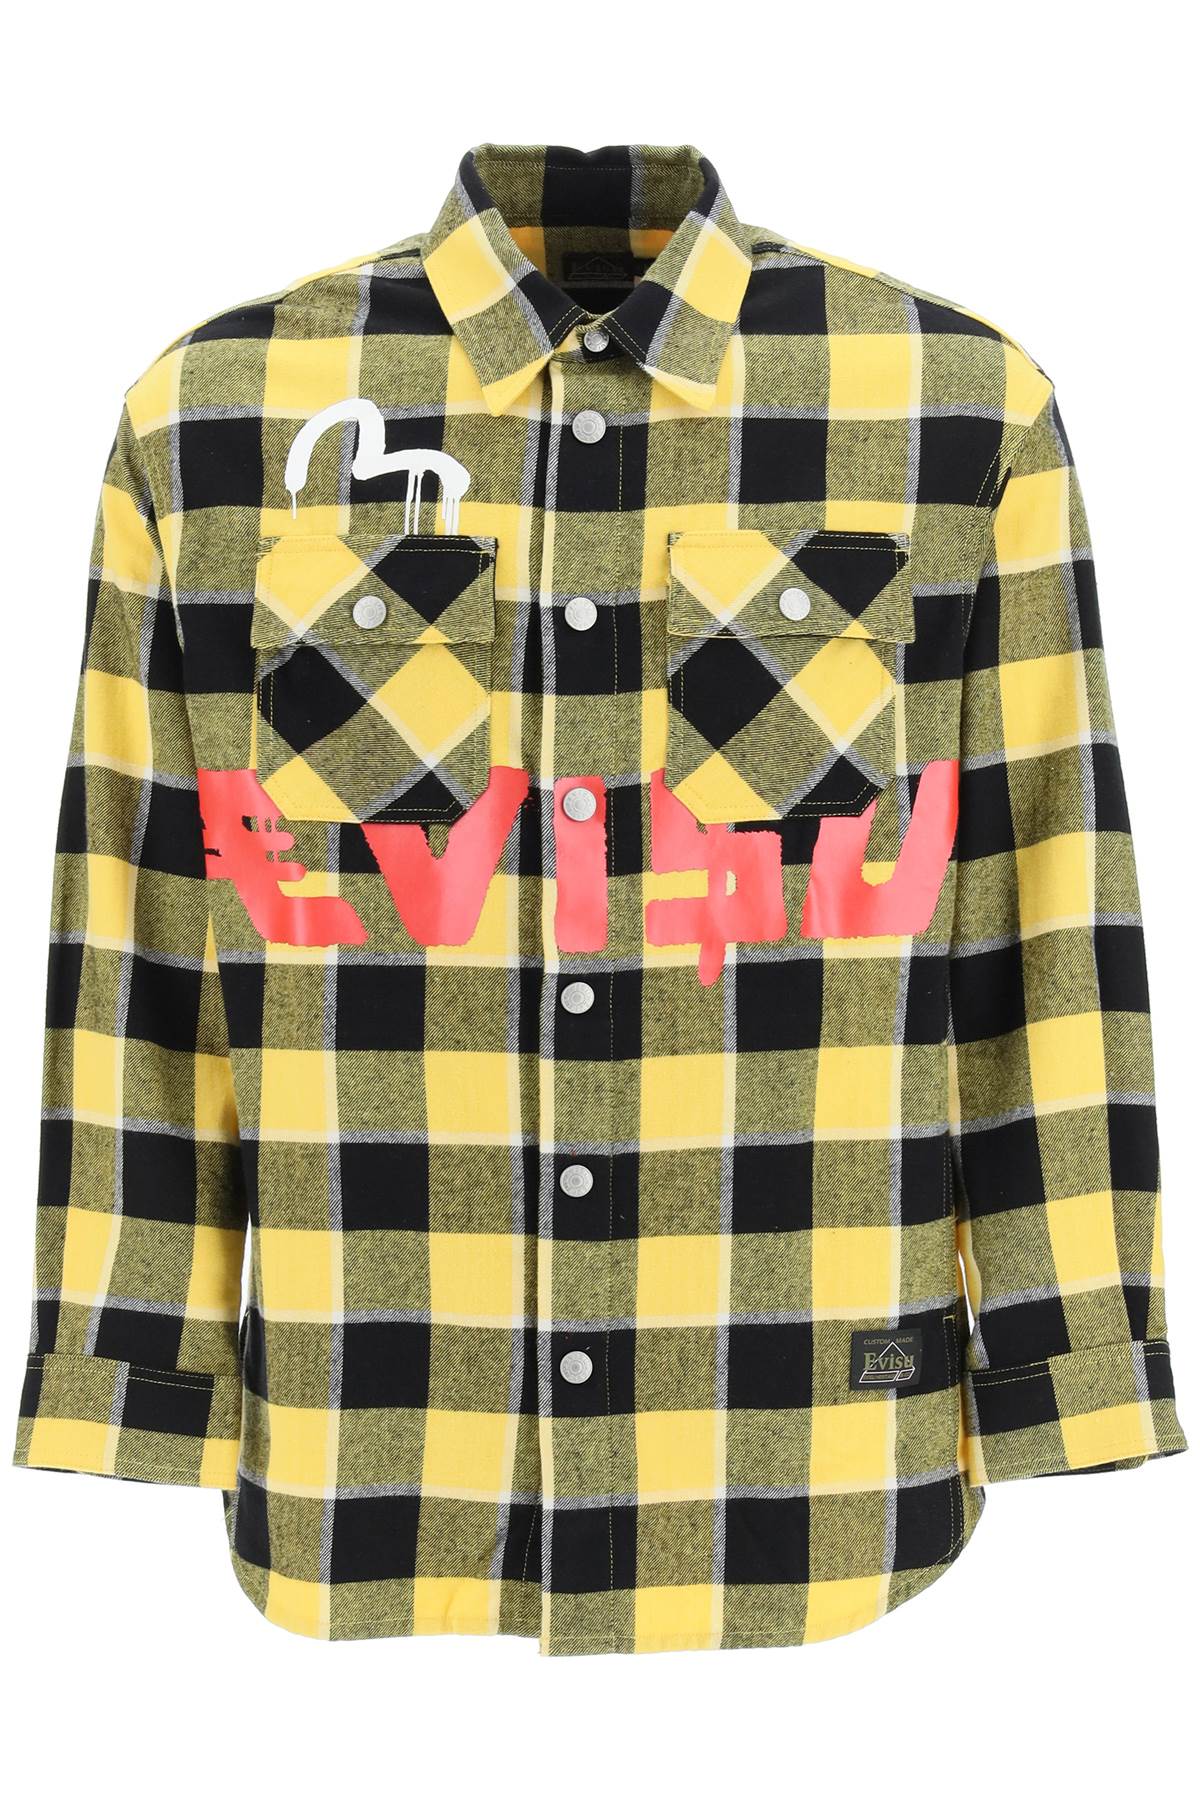 Evisu Oversized Check Shirt